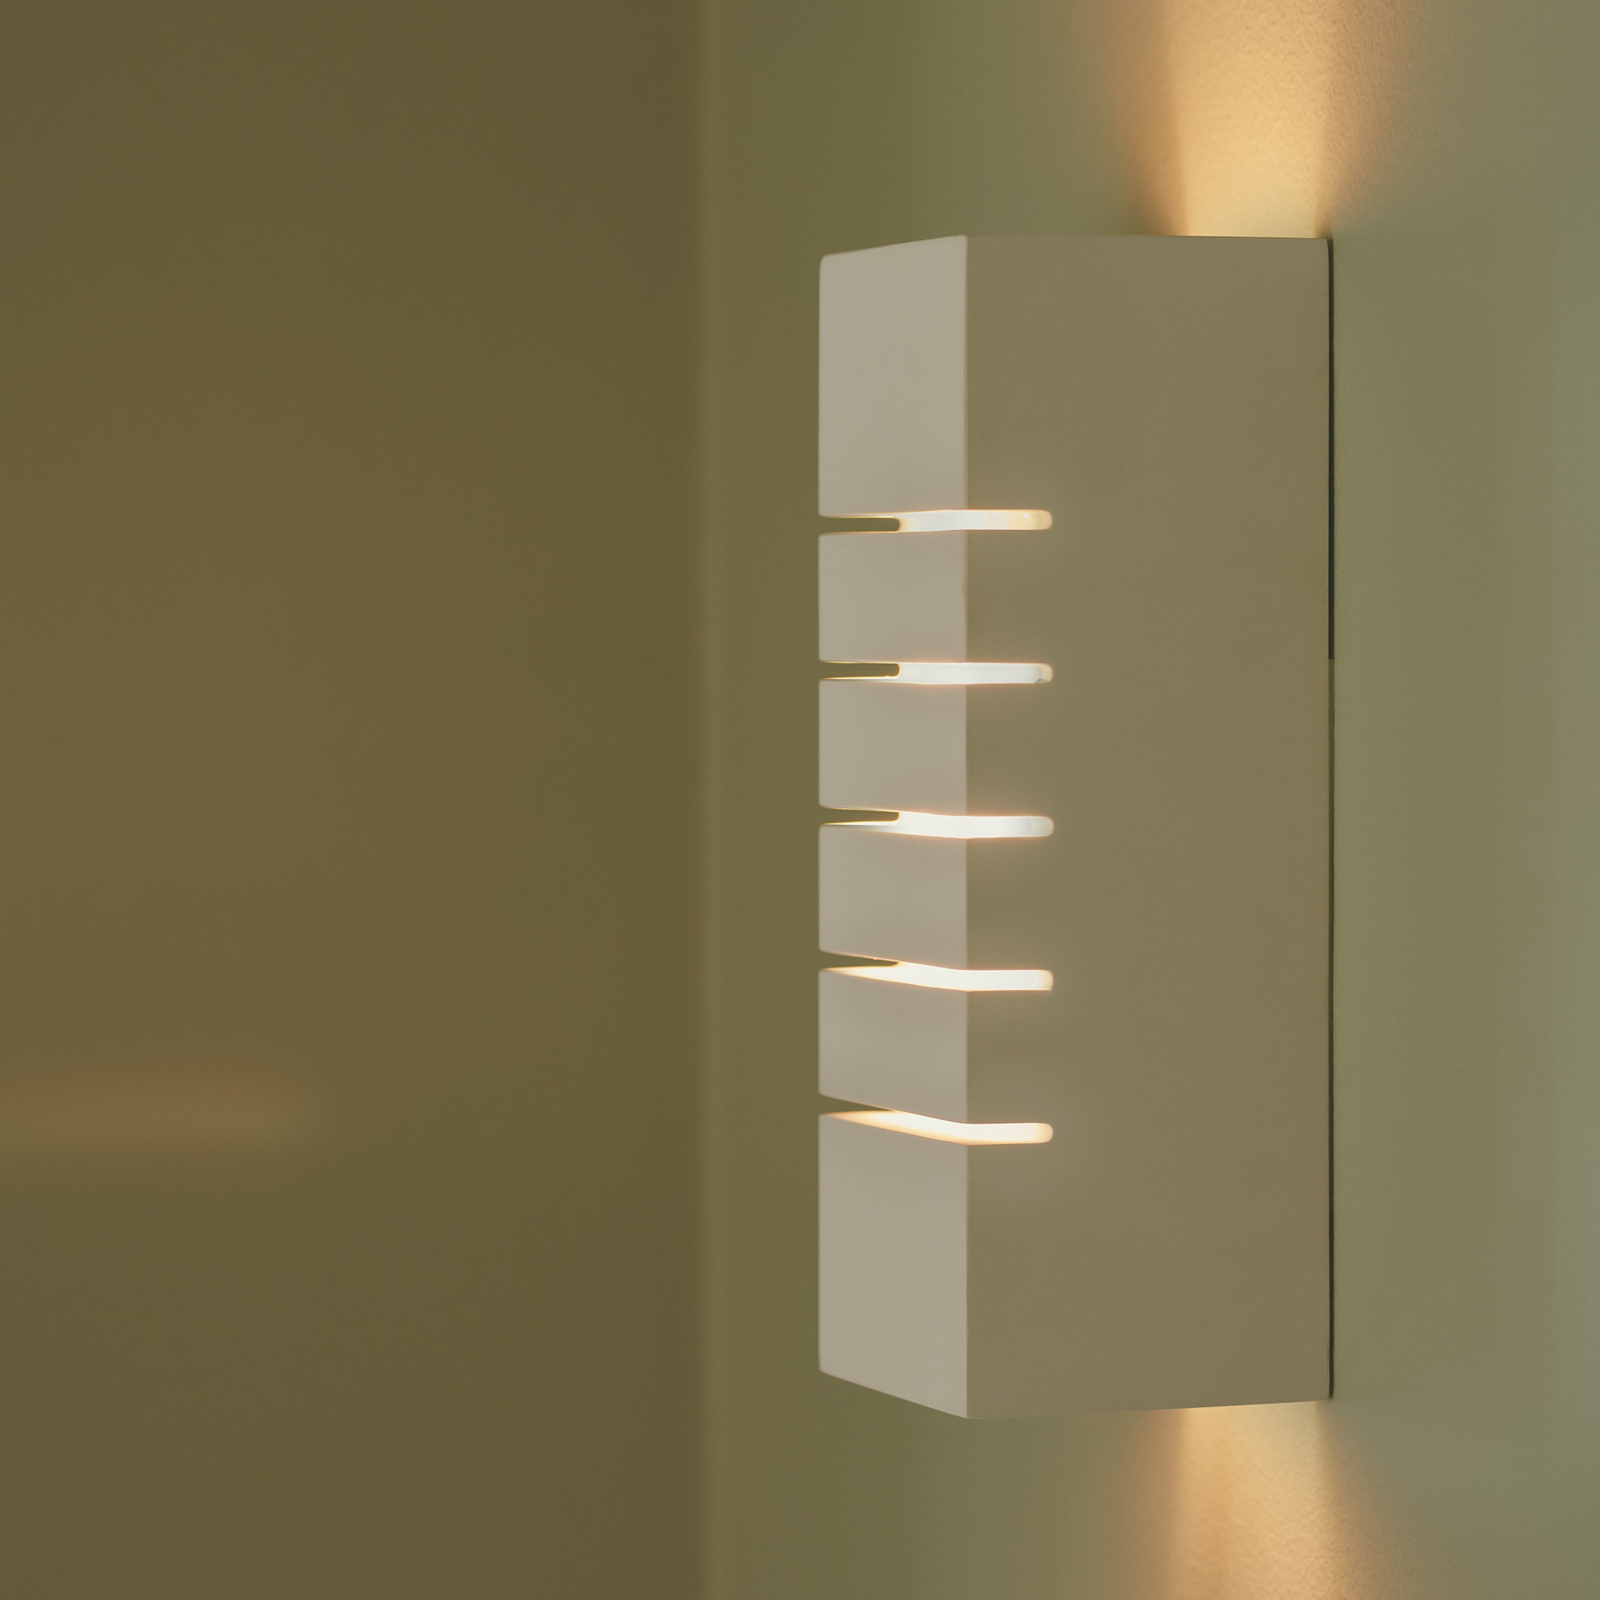 Lancio Square wall light made of plaster, with plug, white